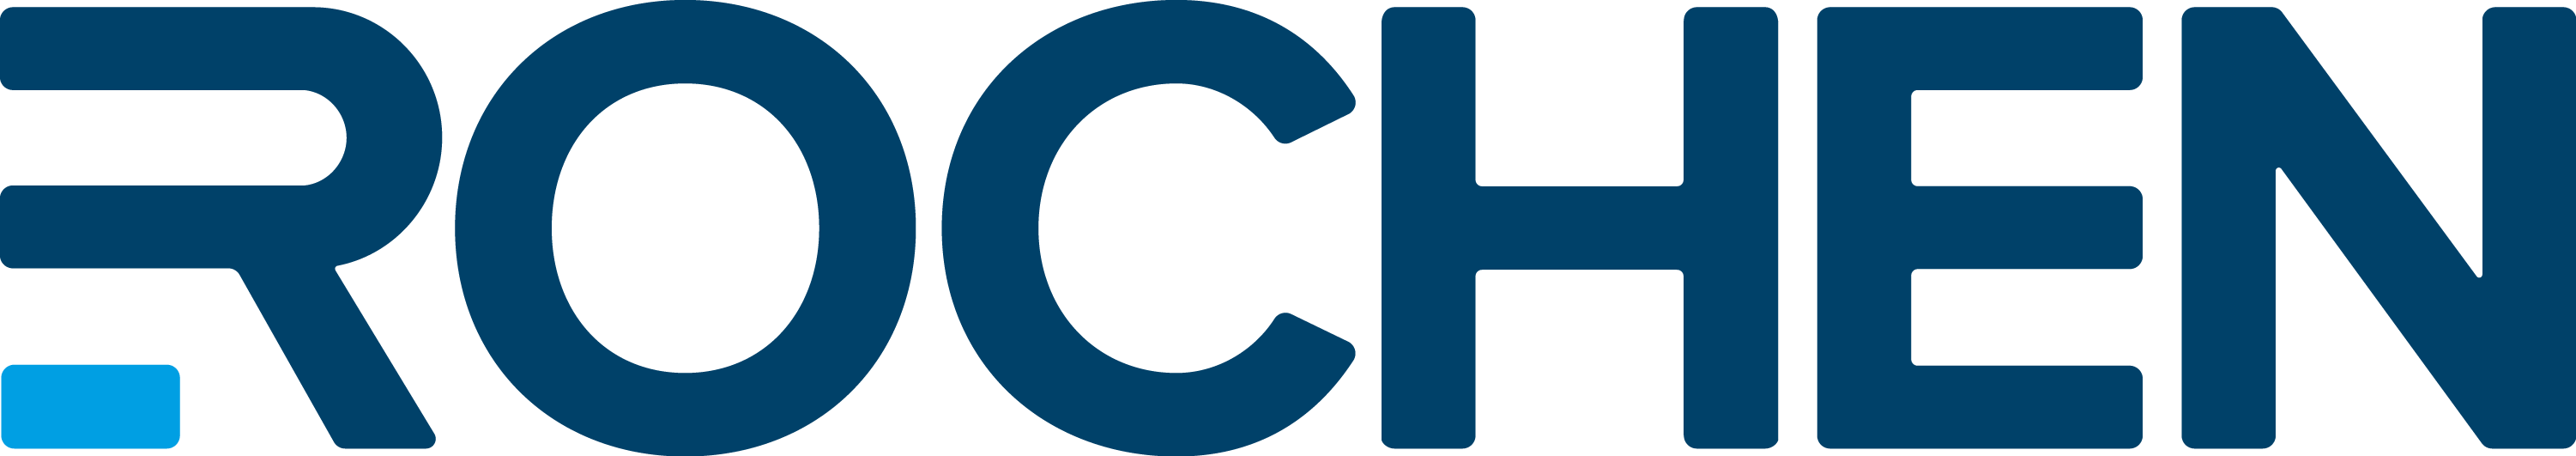 Rochen hosting logo affiliate